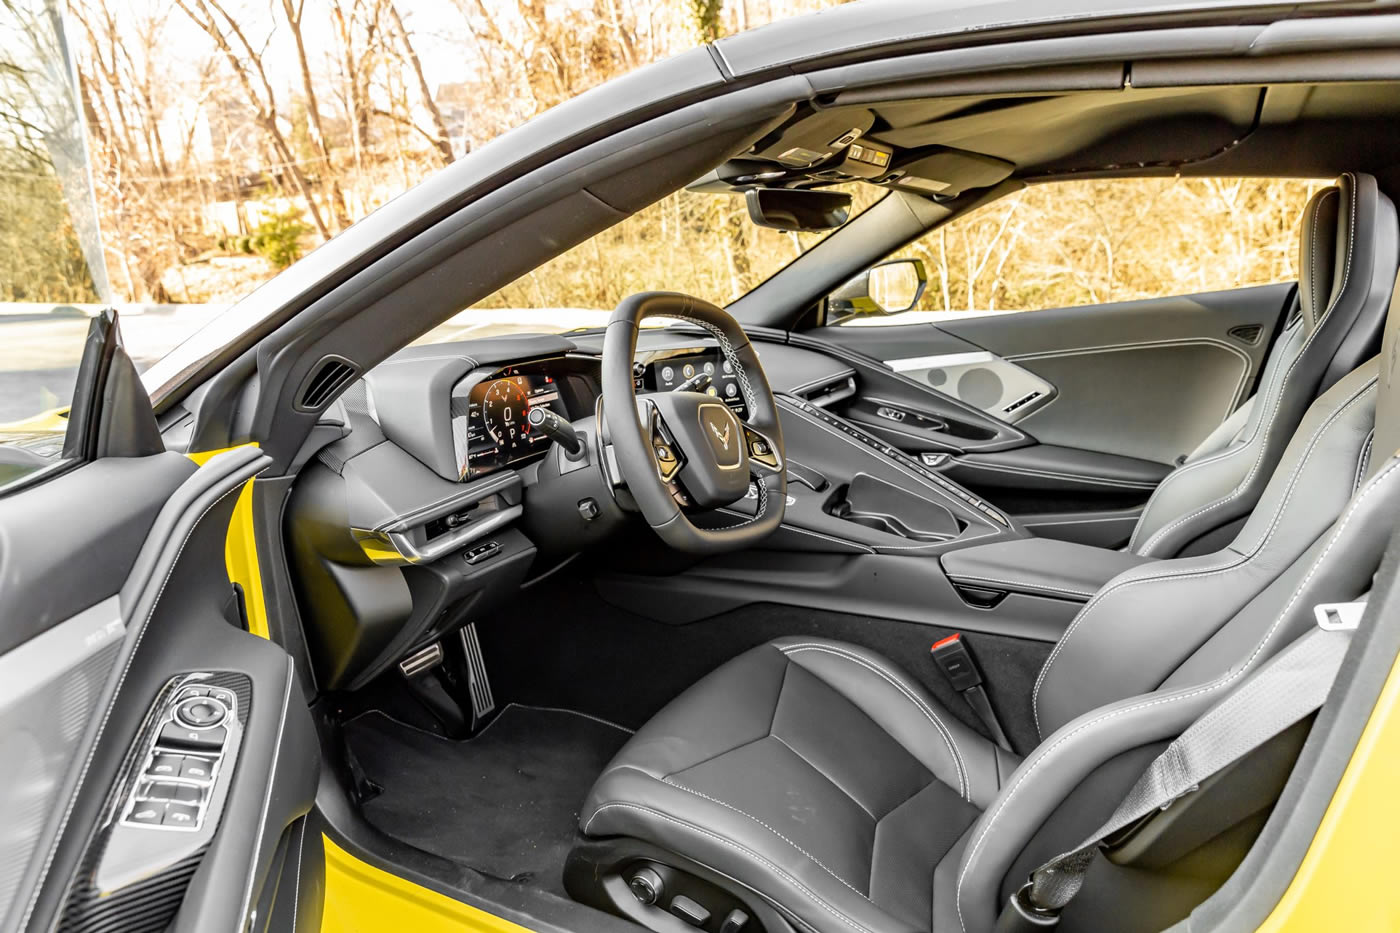 2021 Corvette Stingray Convertible 2LT Z51 in Accelerate Yellow